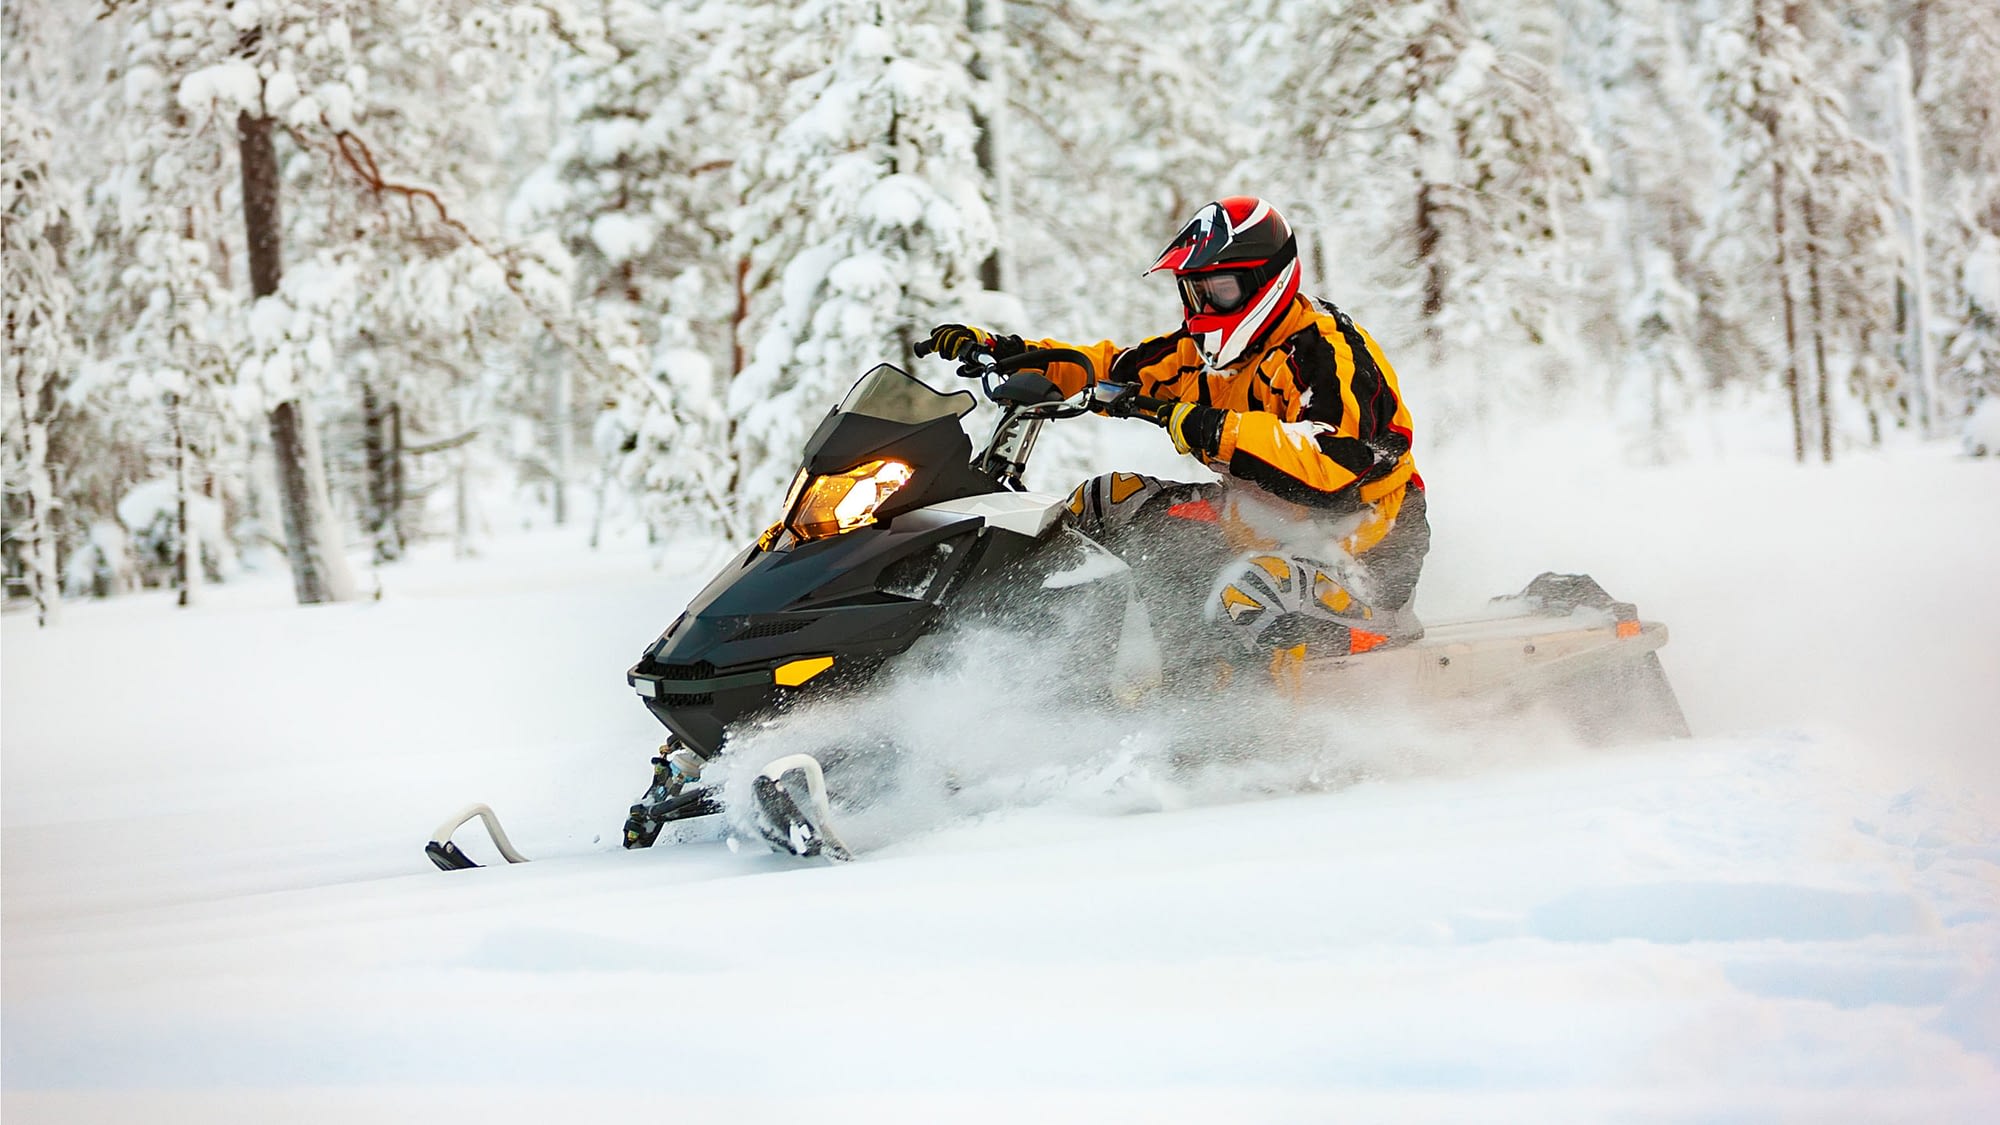 Person riding a snowmobile in snowy landscape.